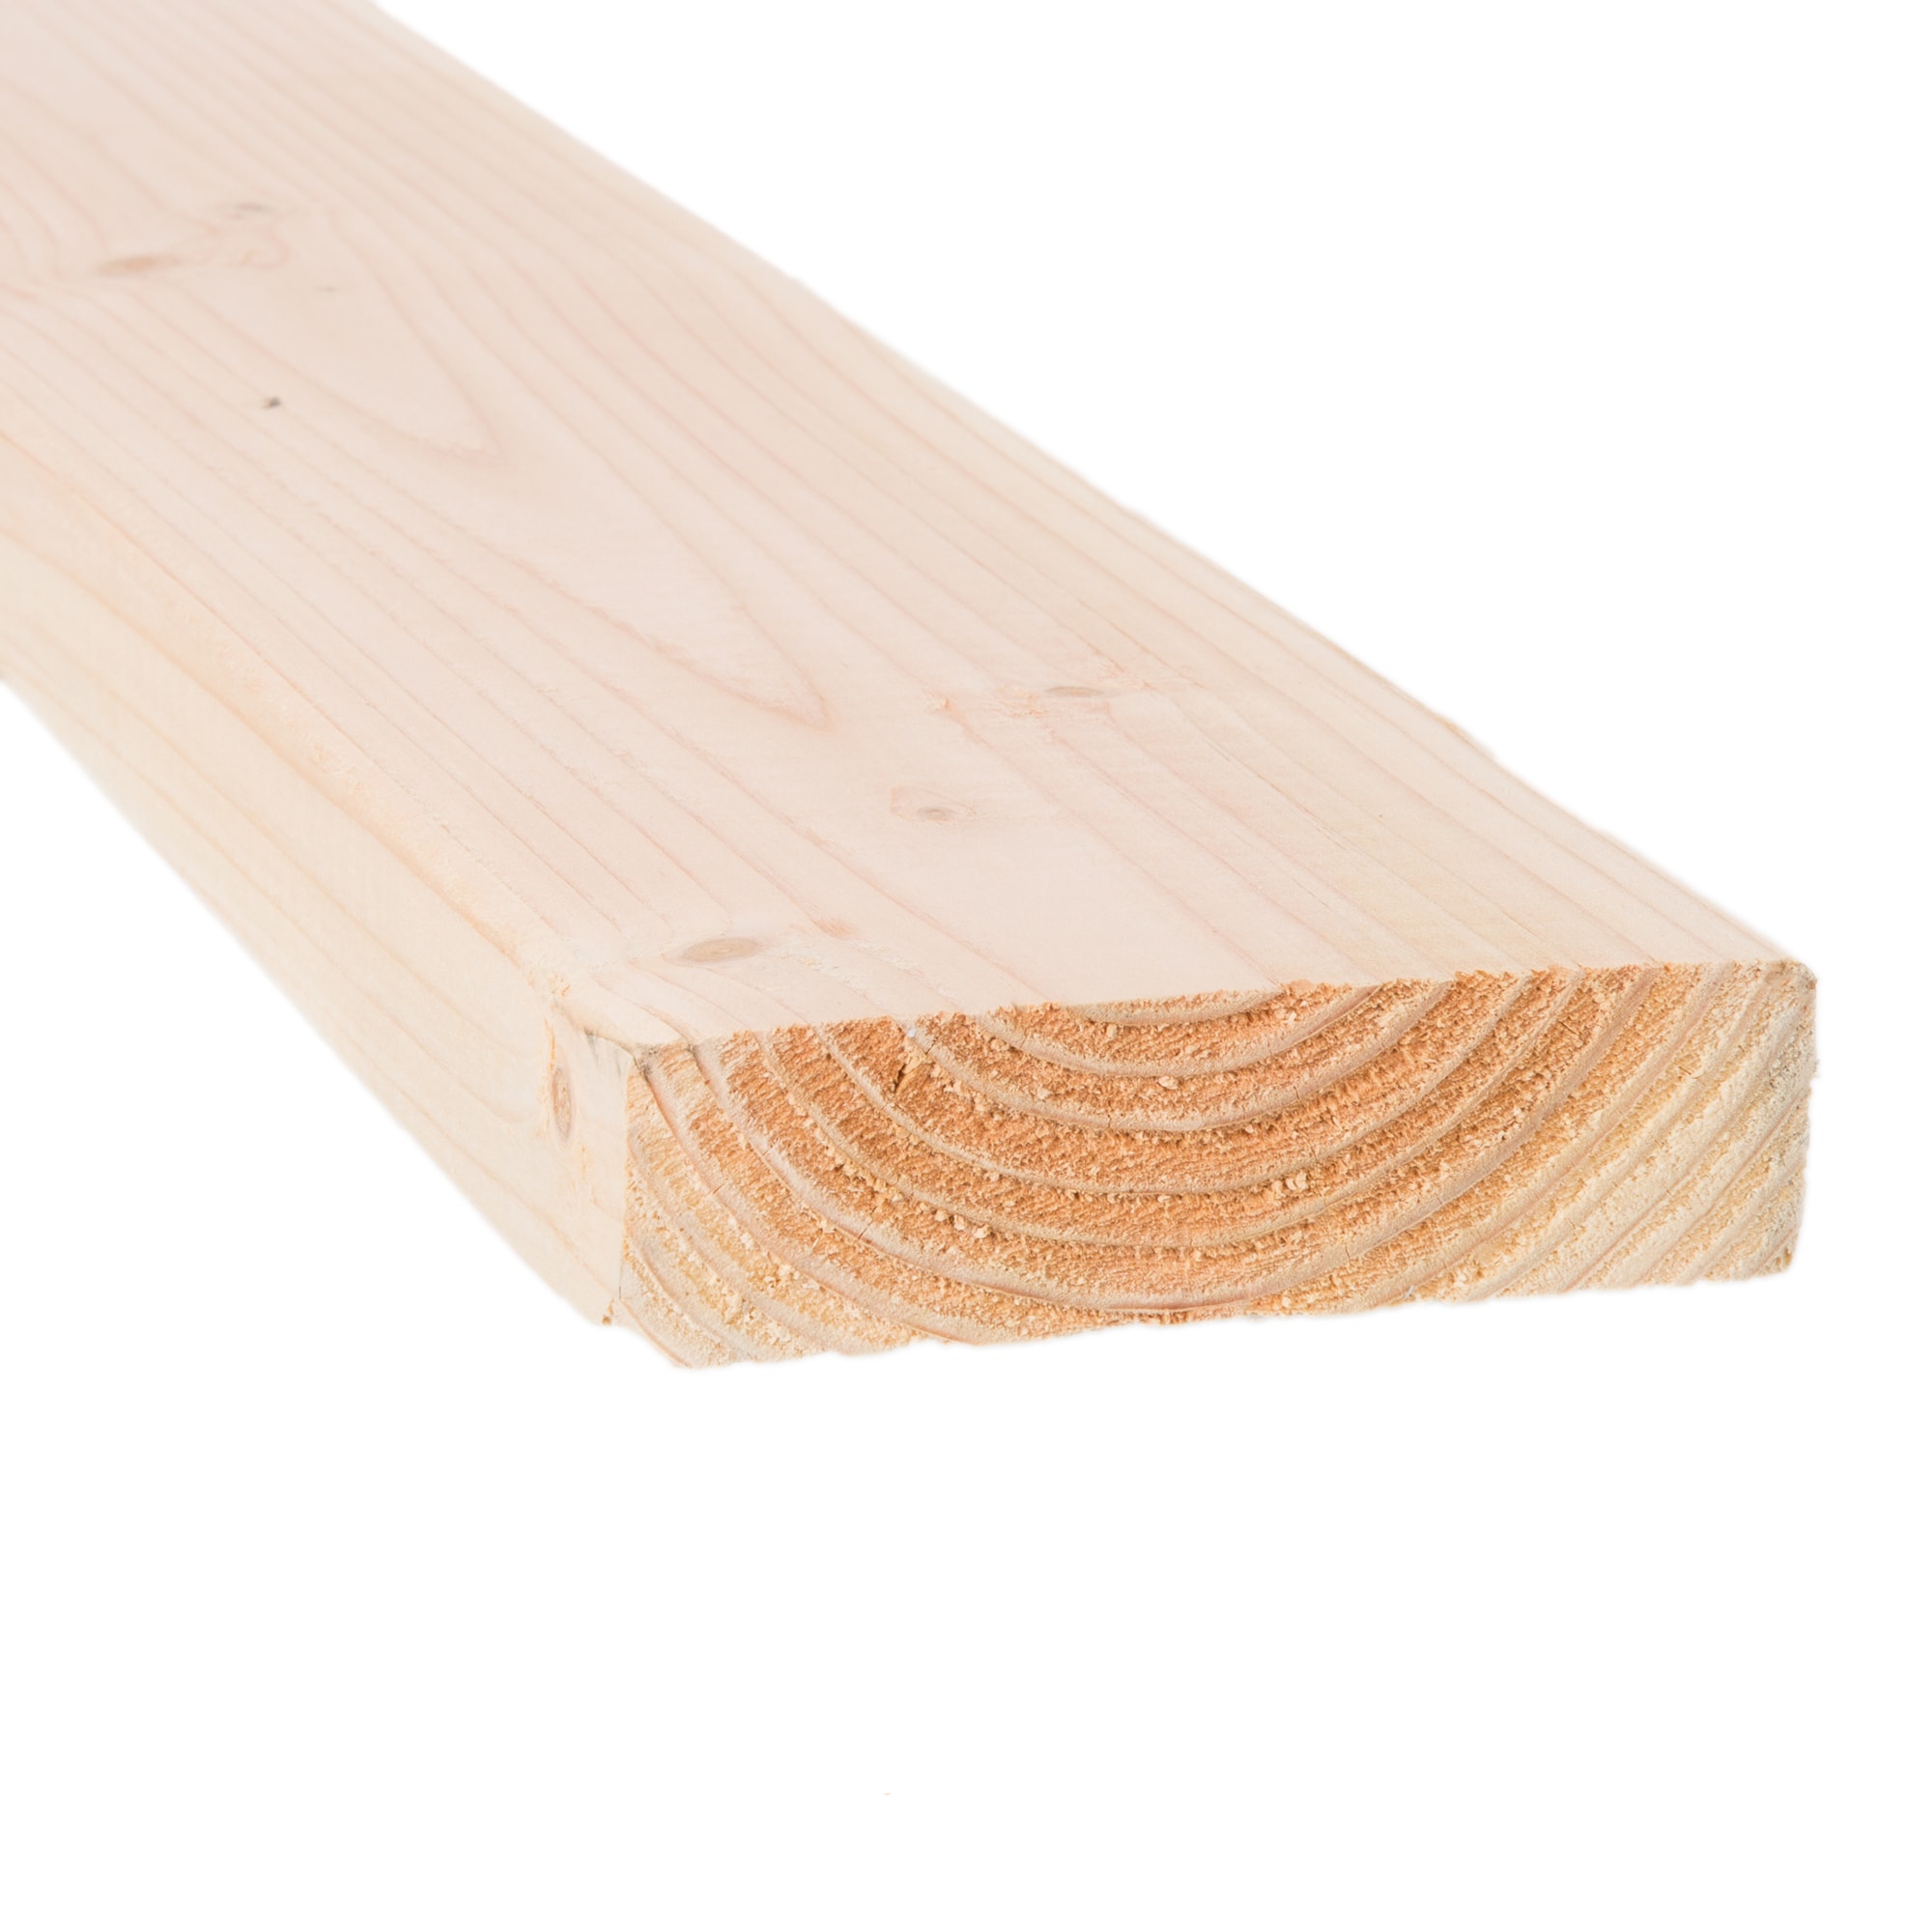 2-in x 6-in x 8-ft Fir Kiln-dried Lumber in the Dimensional Lumber 